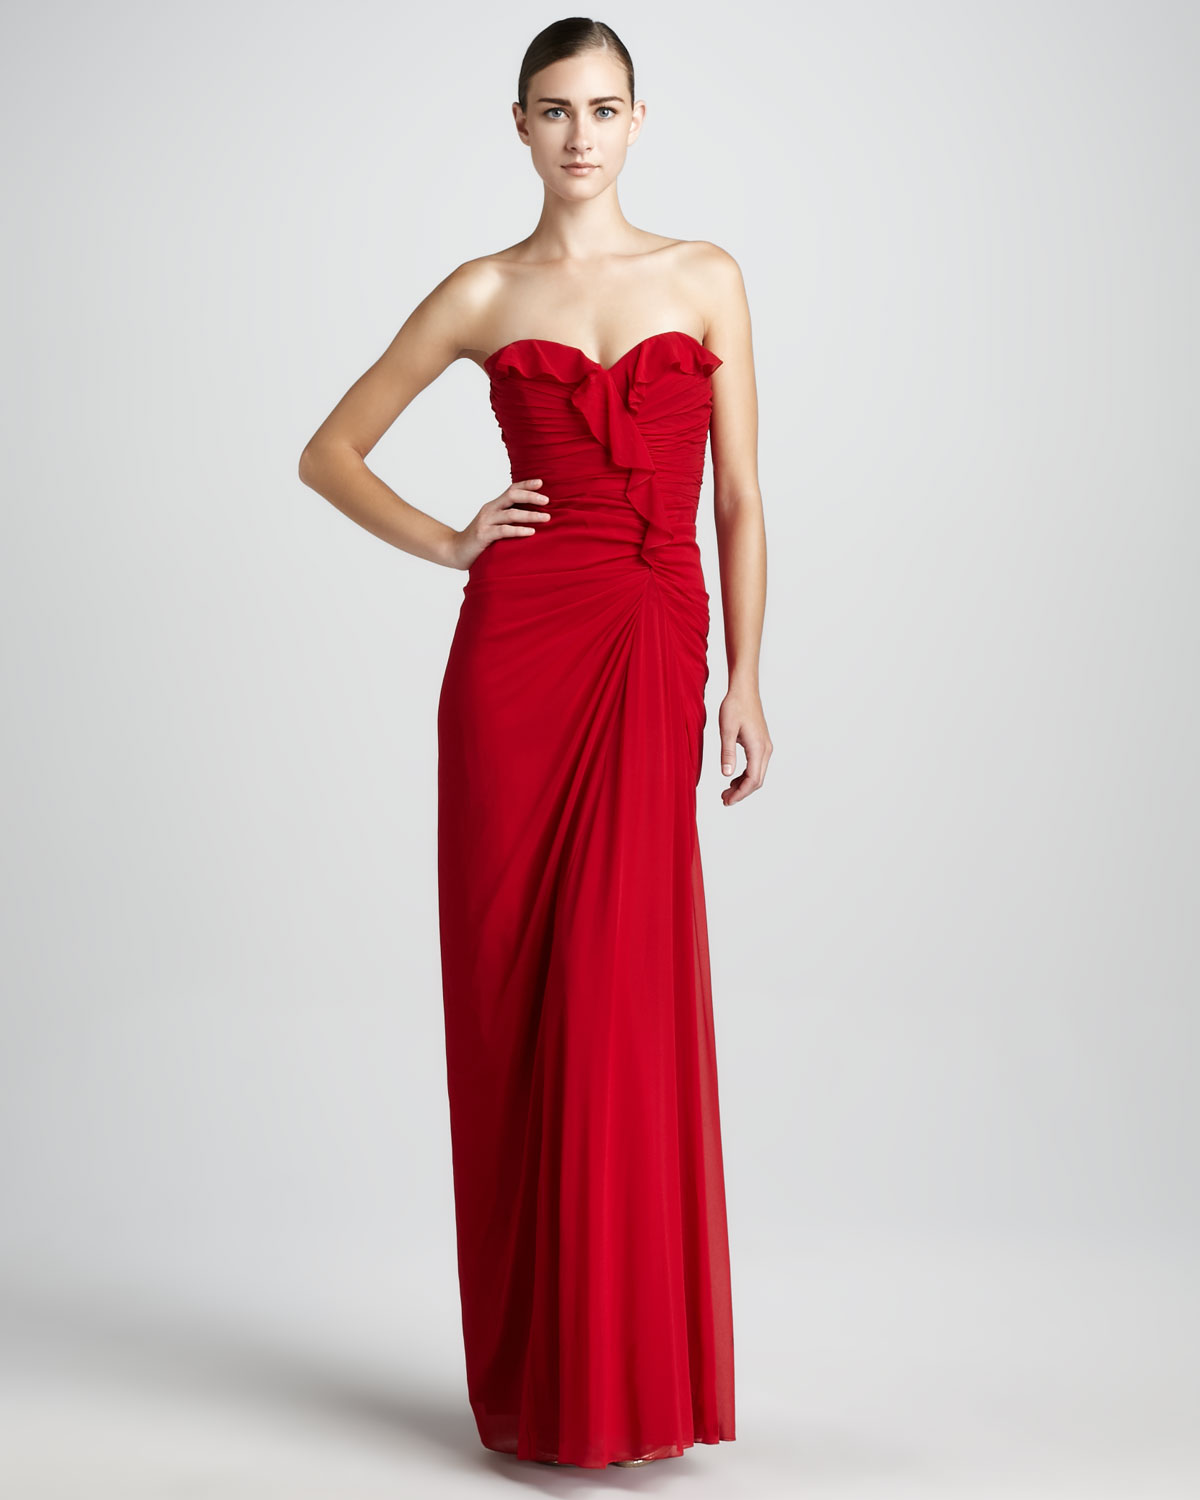 Lyst - Badgley mischka Strapless Ruffled Gown in Red